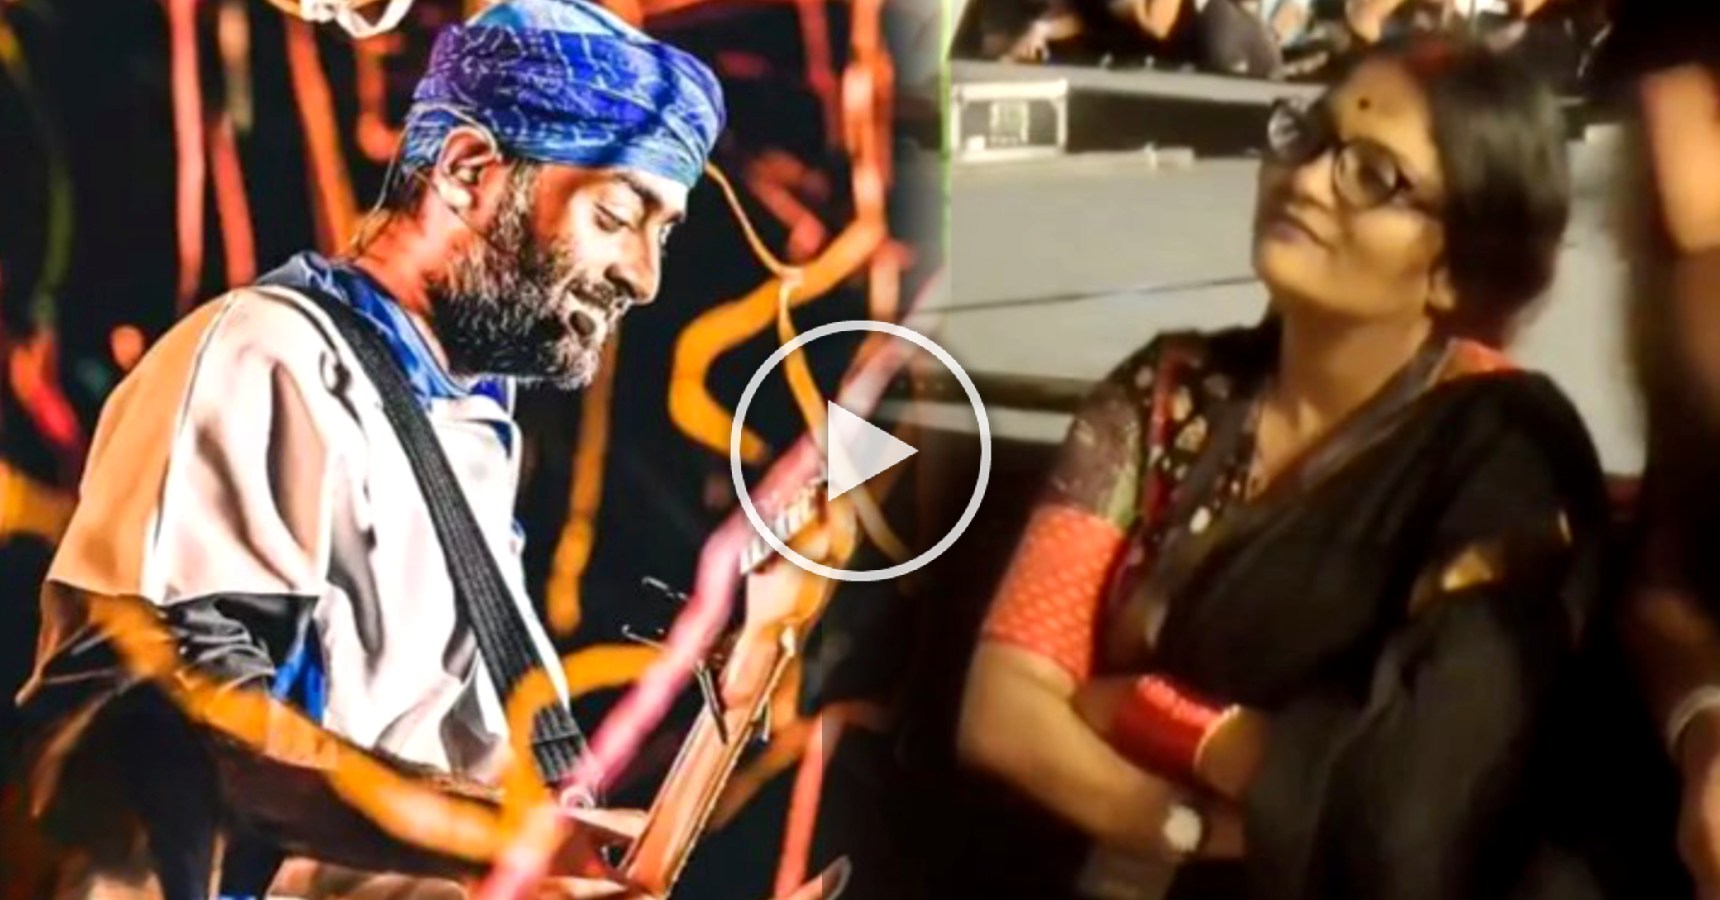 Arijit Singh Wife koel also sings with him video viral on social media